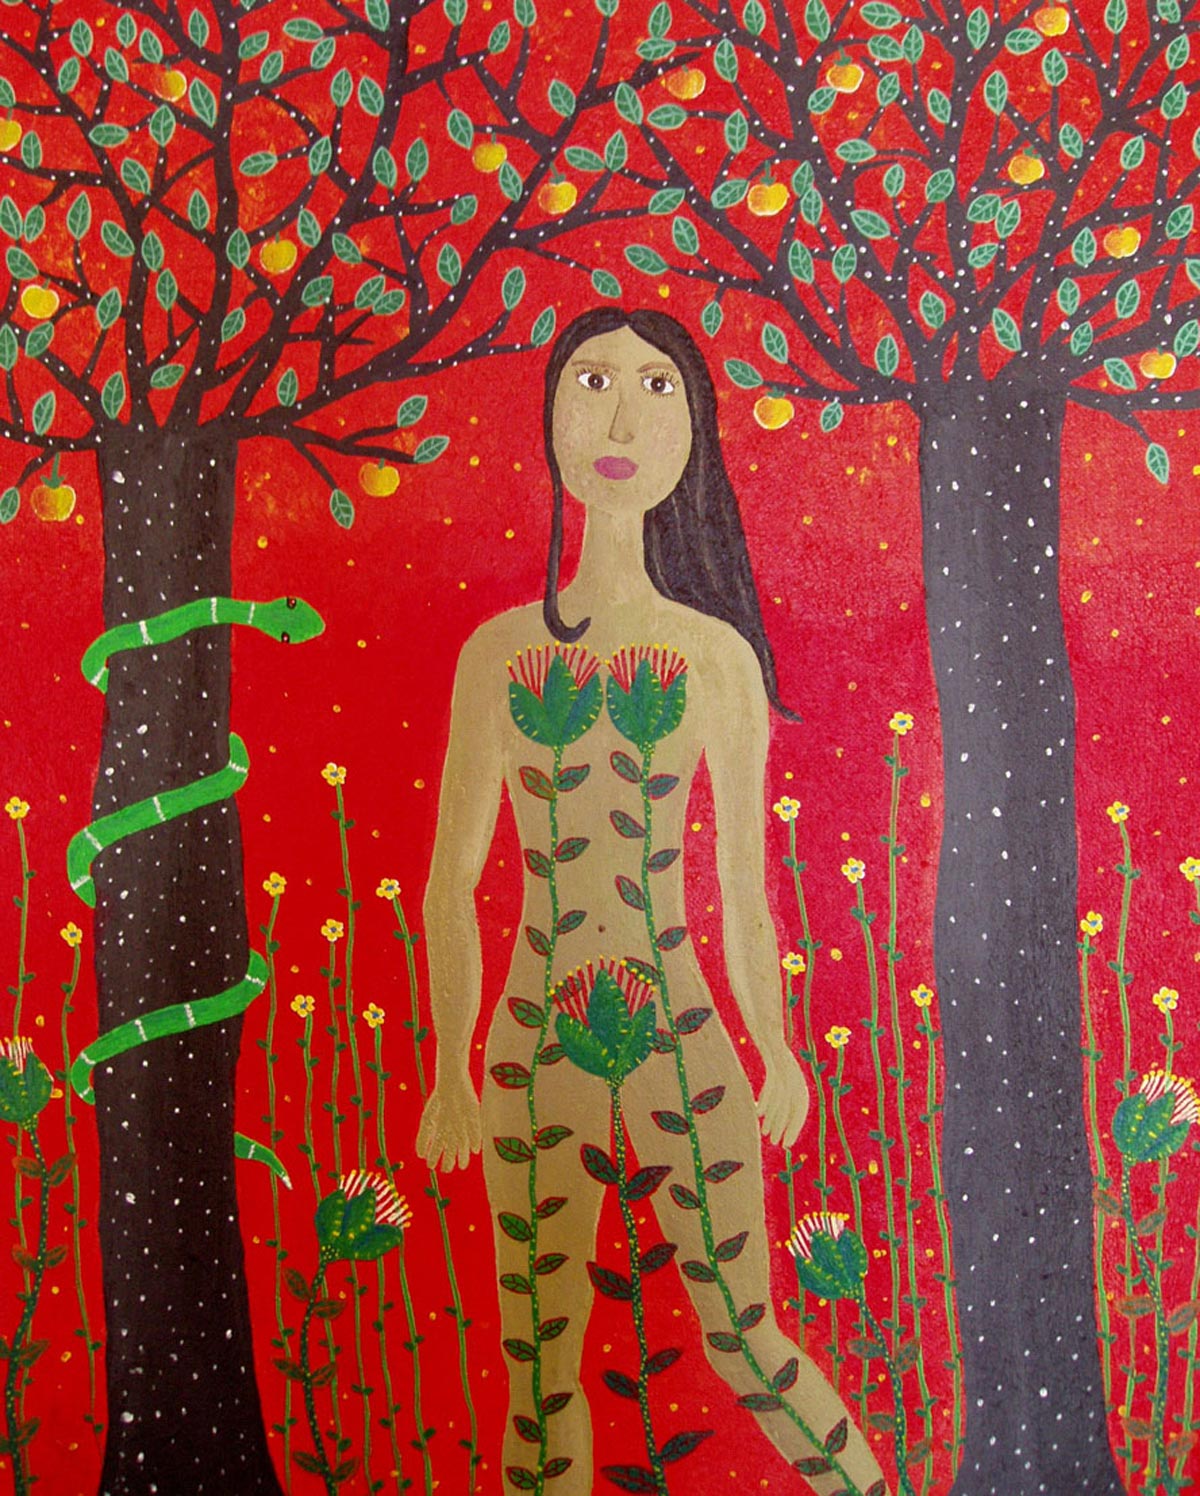 Eva, SOLD, 40 x 50, acrylic on canvas board